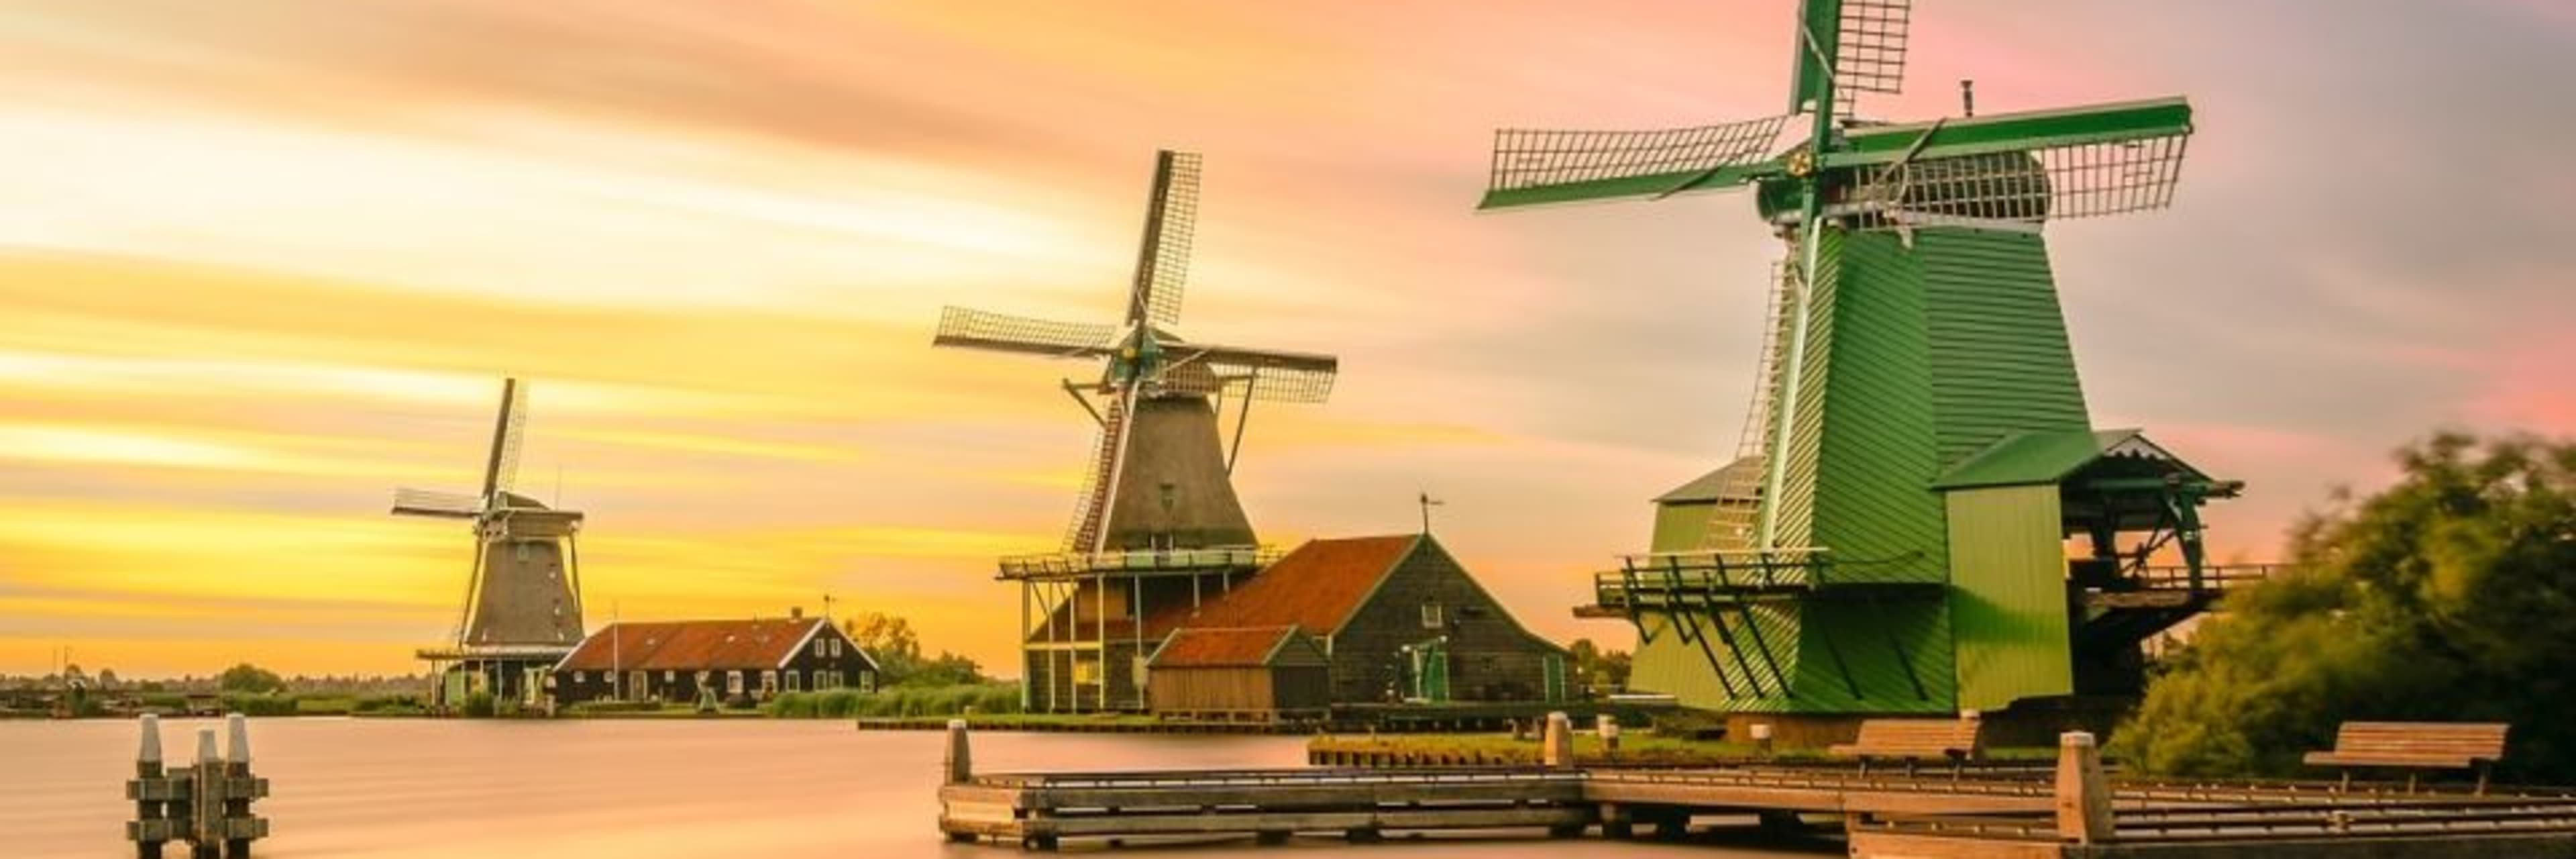 The windmills at Zaanse Schans village just outside Amsterdam.